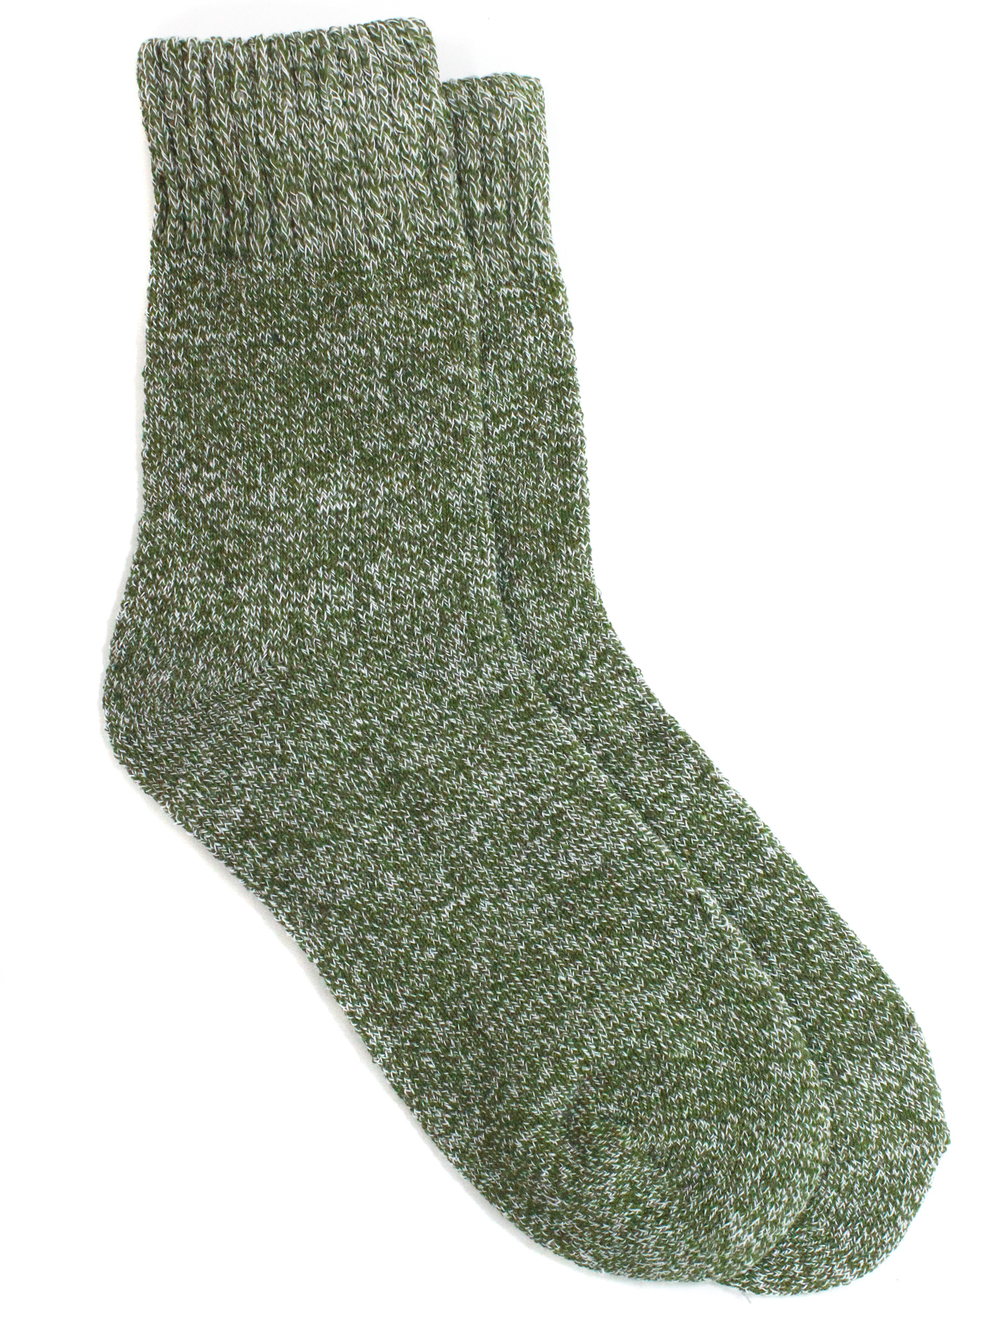 Носки р.40-45 "Крапушки" Утепленные Зеленые